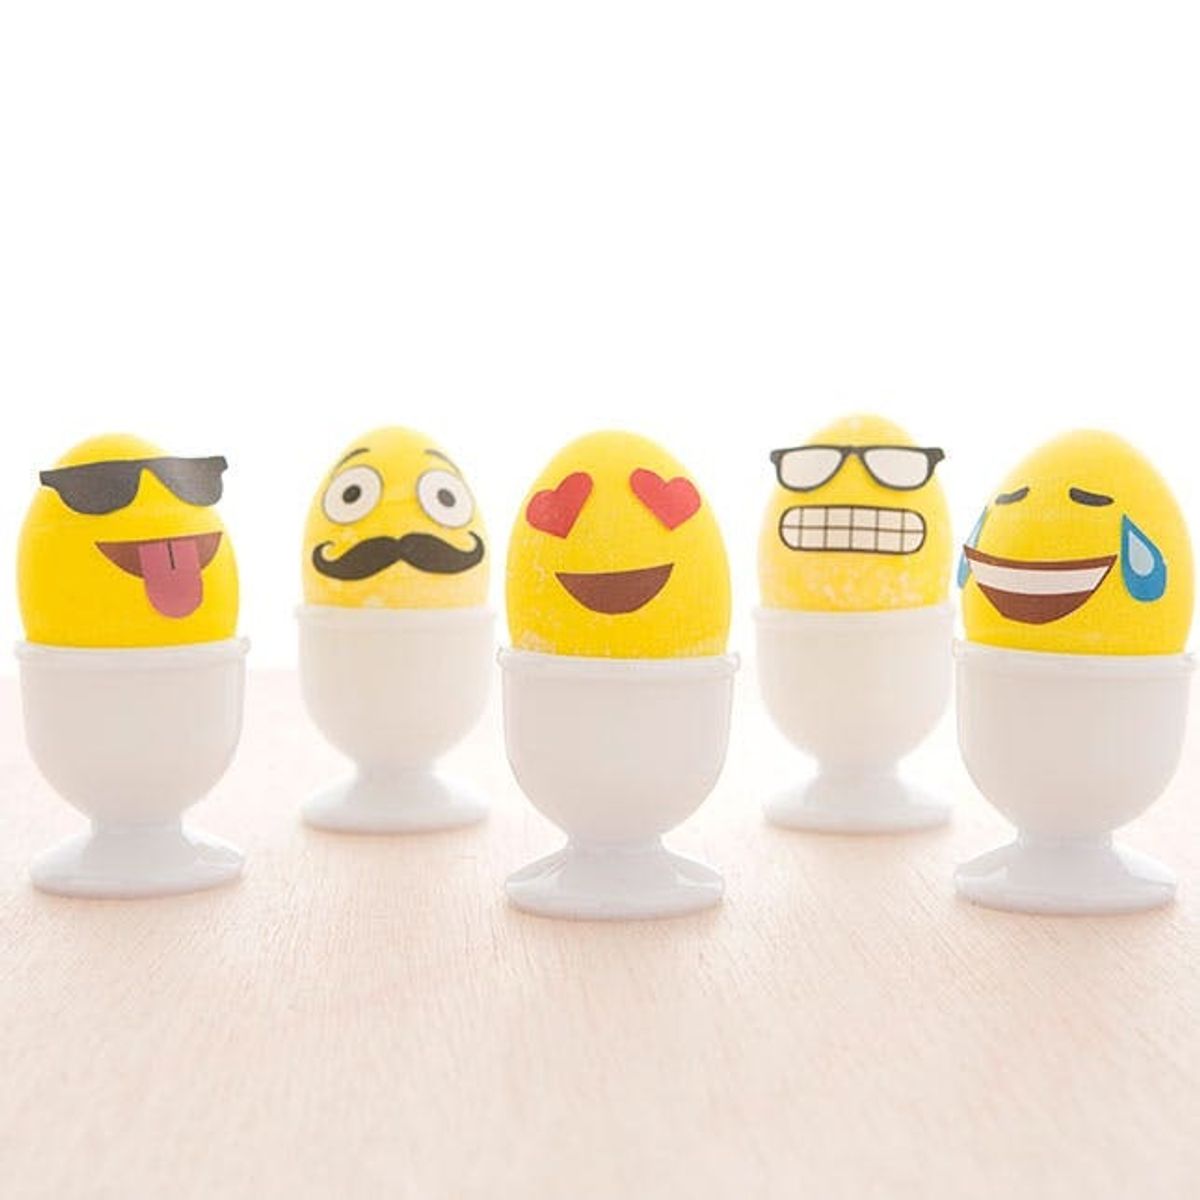 How to Make Emoji Easter Eggs (+ Free Printable!)